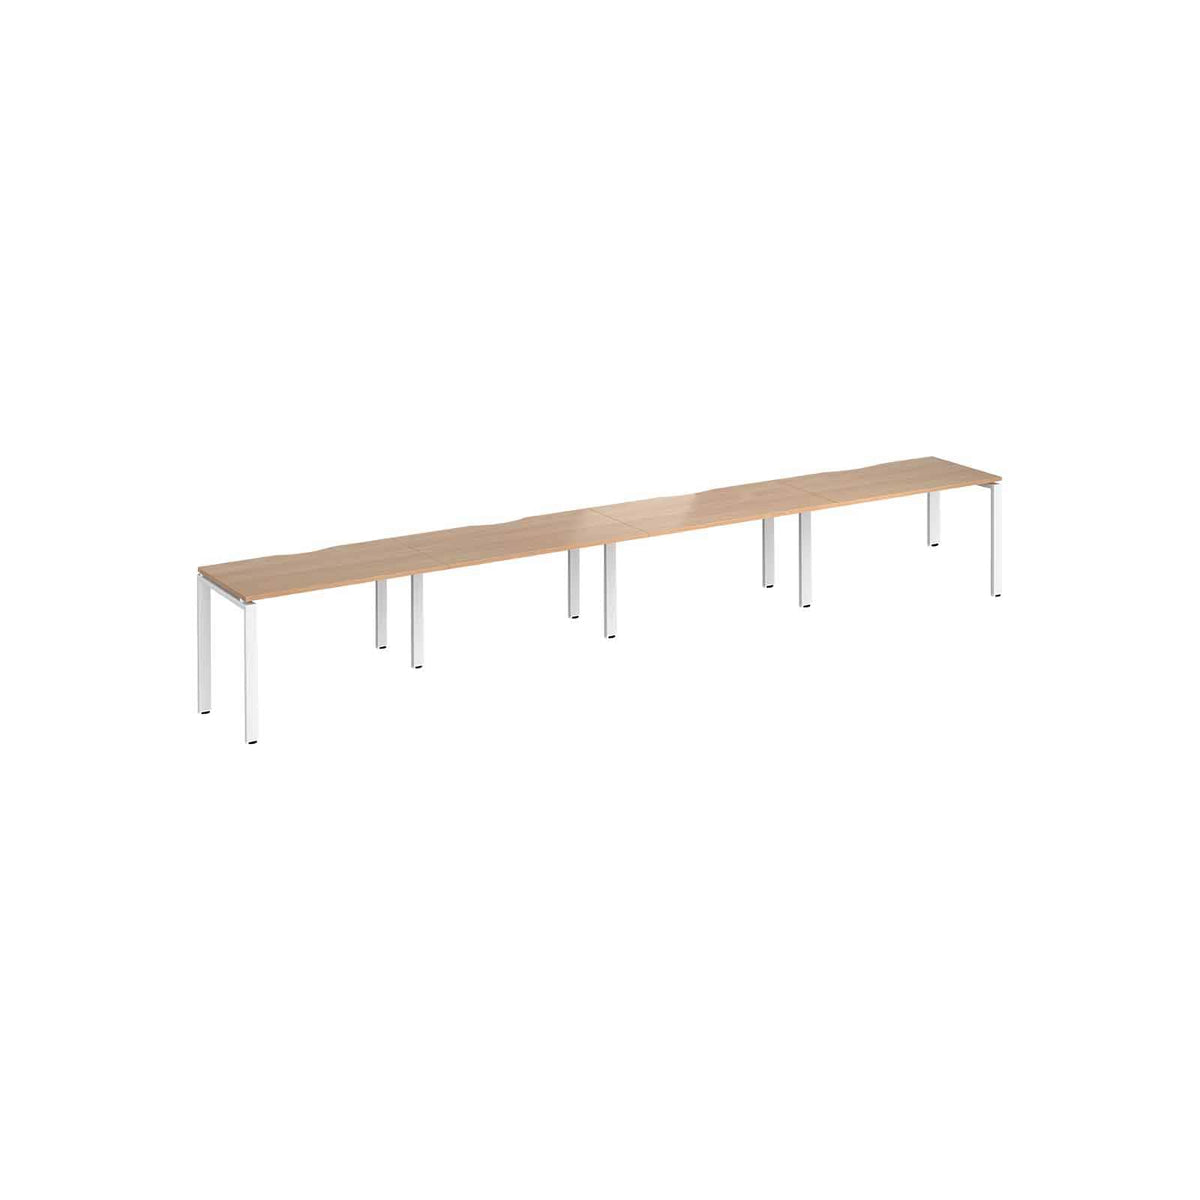 4 Person Single Row Bench Desk W1000mm x D600mm x H740mm